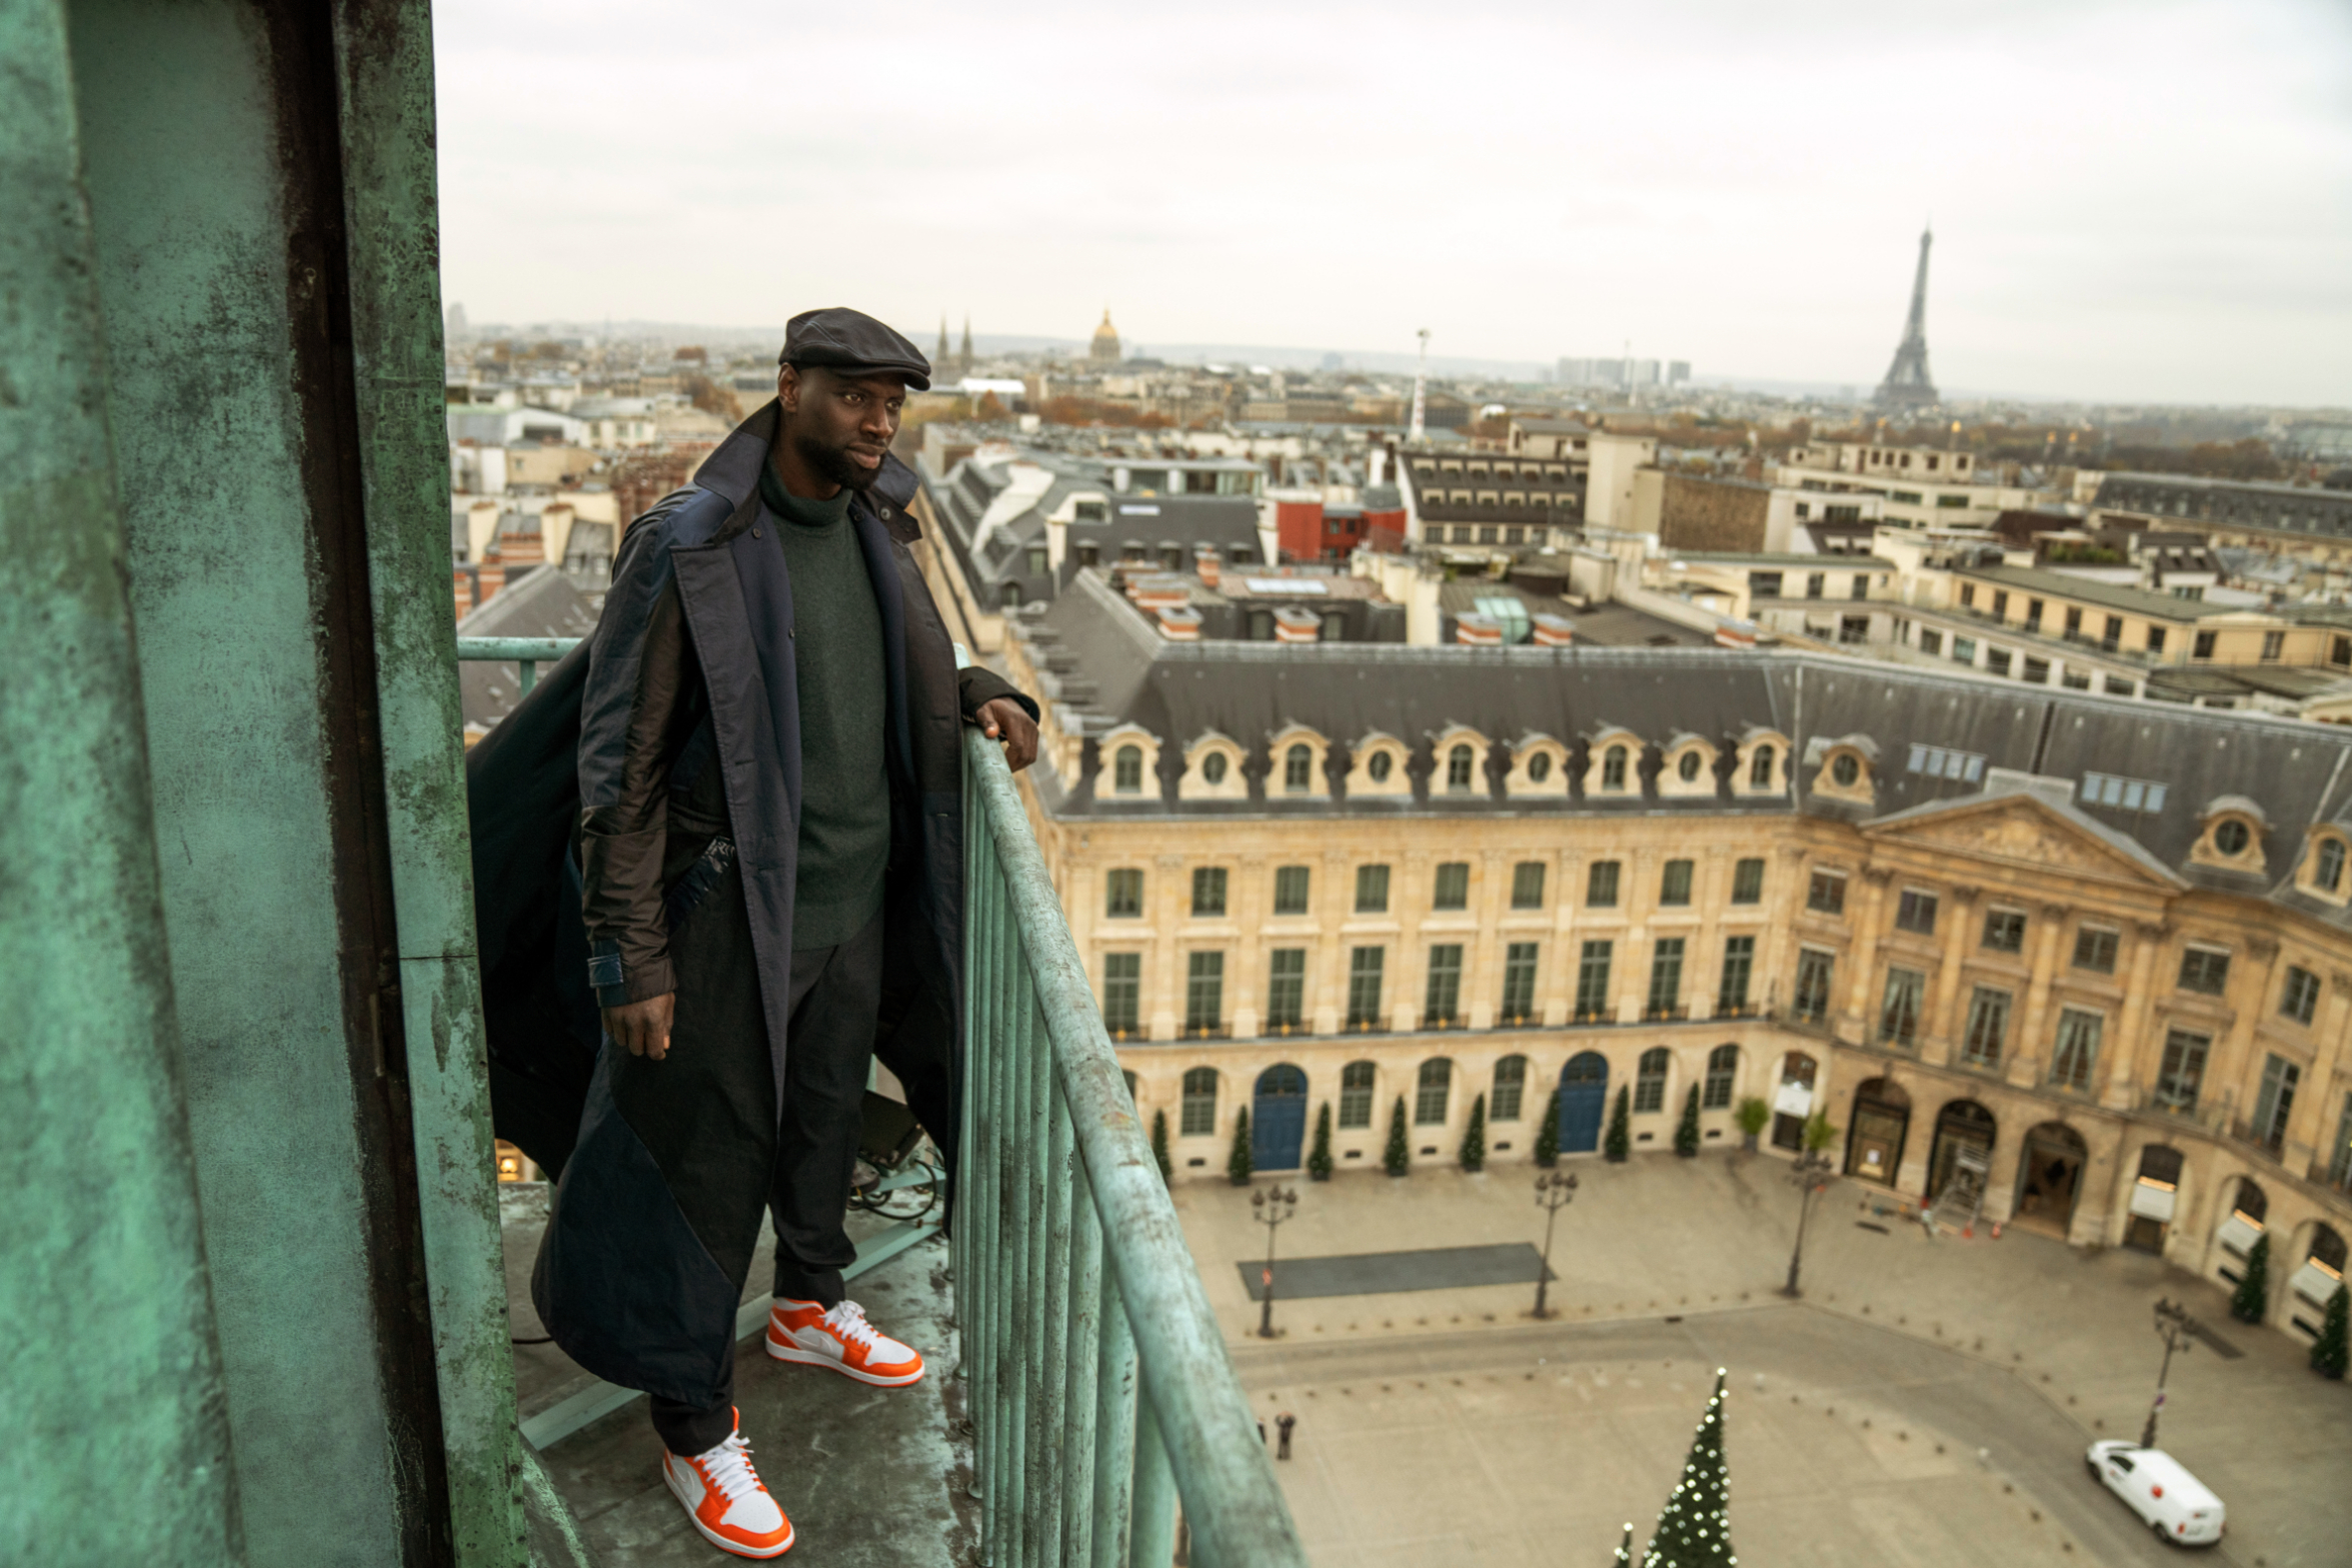 man standing on a balcony overlooking paris